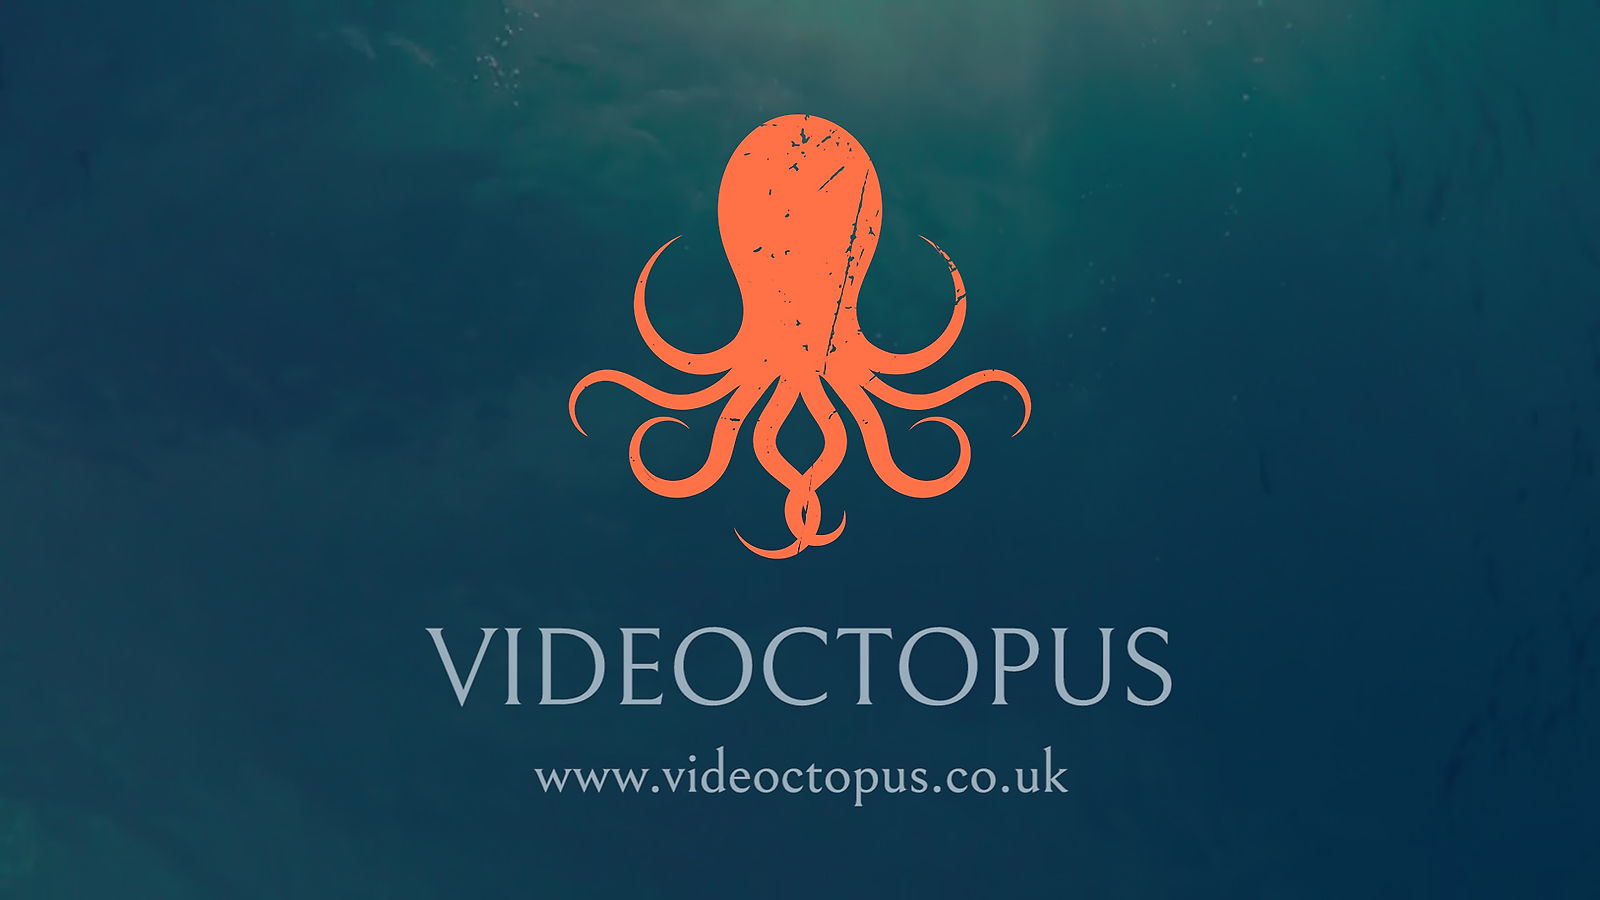 Videoctopus